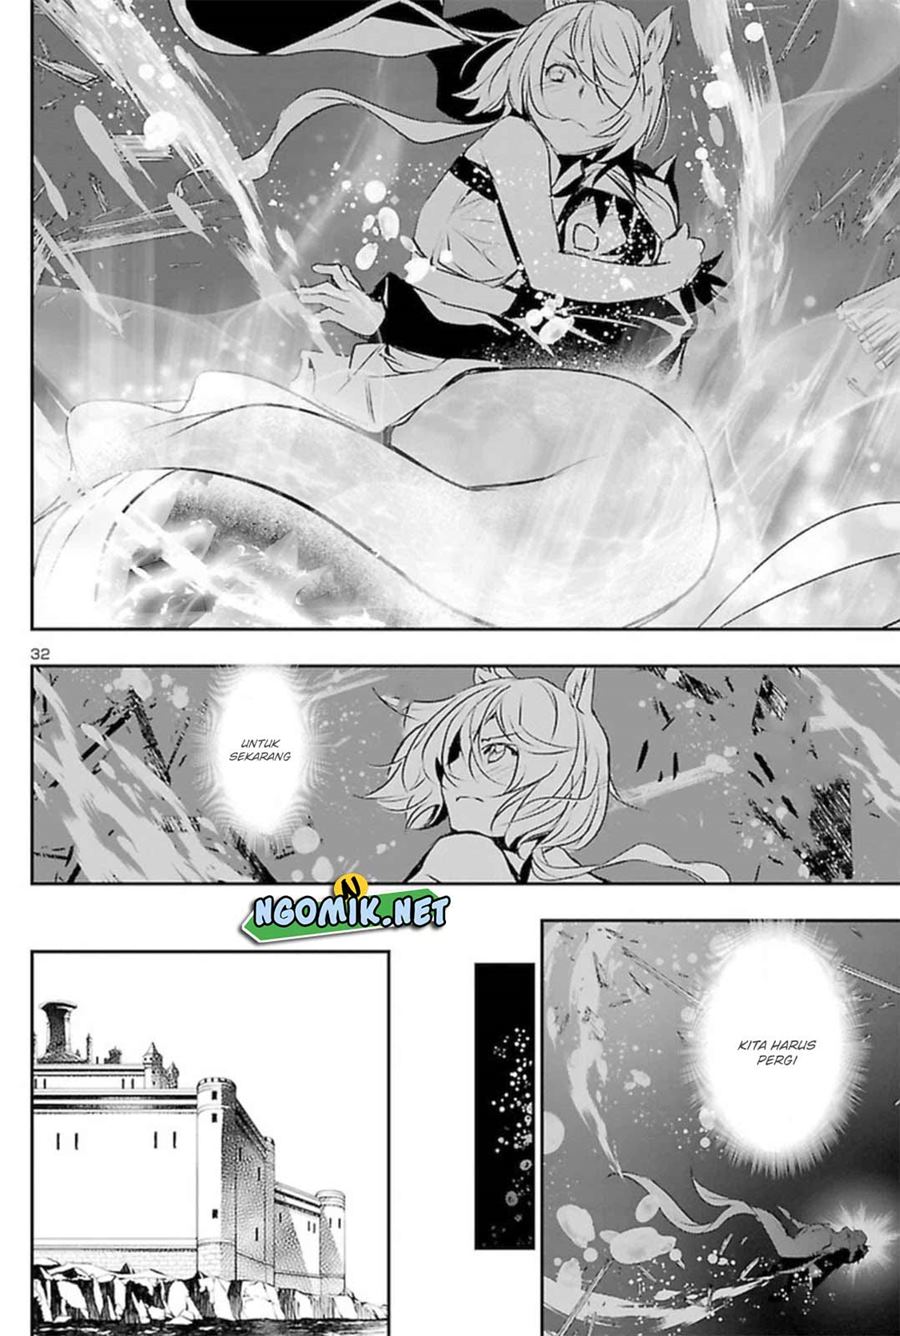 Shinju no Nectar Chapter 52